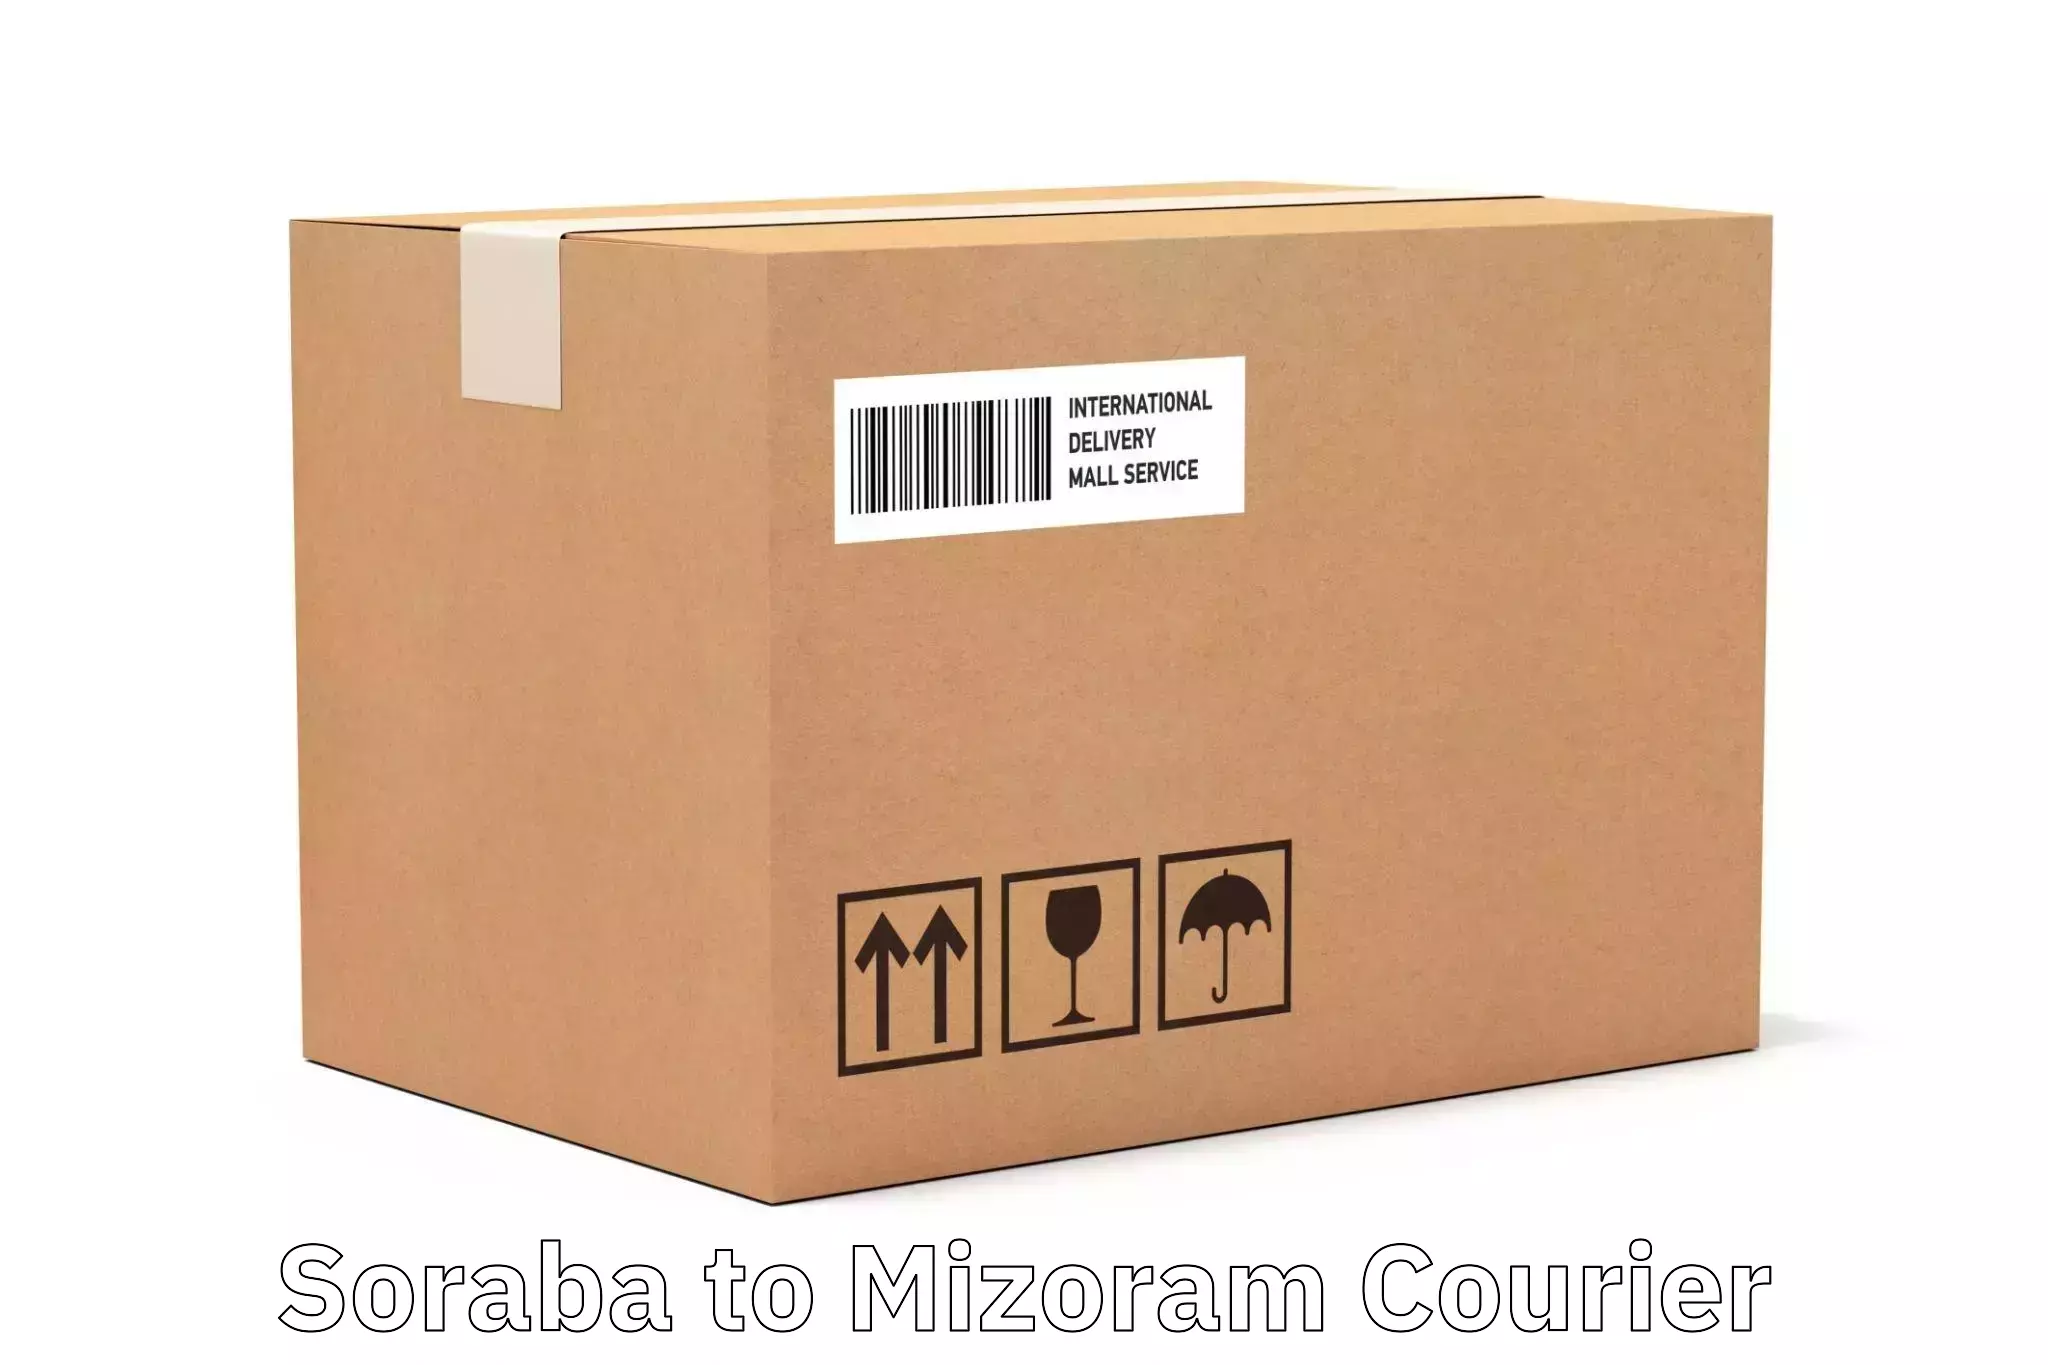 Express courier capabilities Soraba to Aizawl